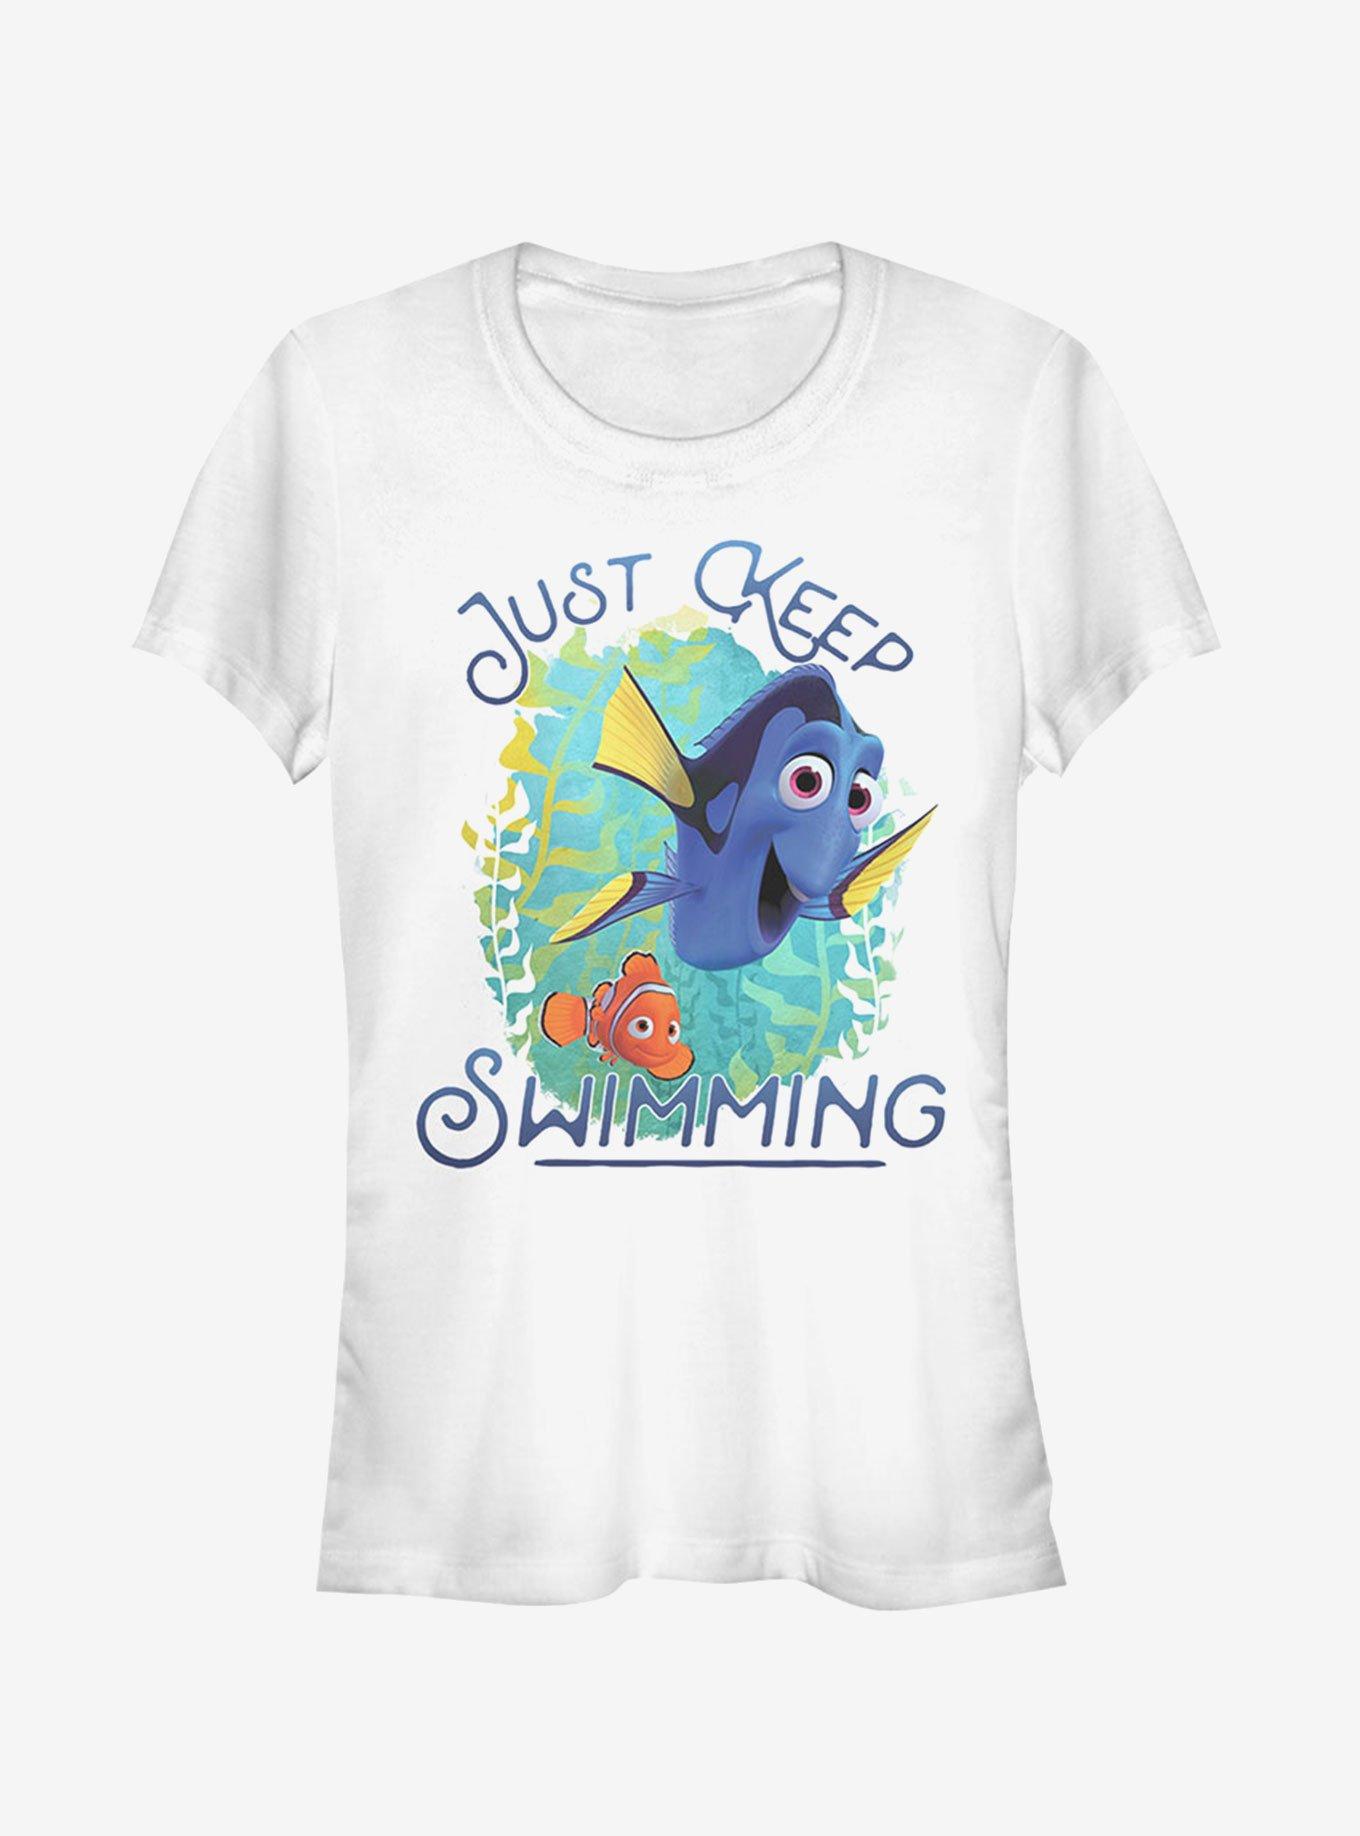 Disney Pixar Finding Dory Motivational Message Girls T-Shirt